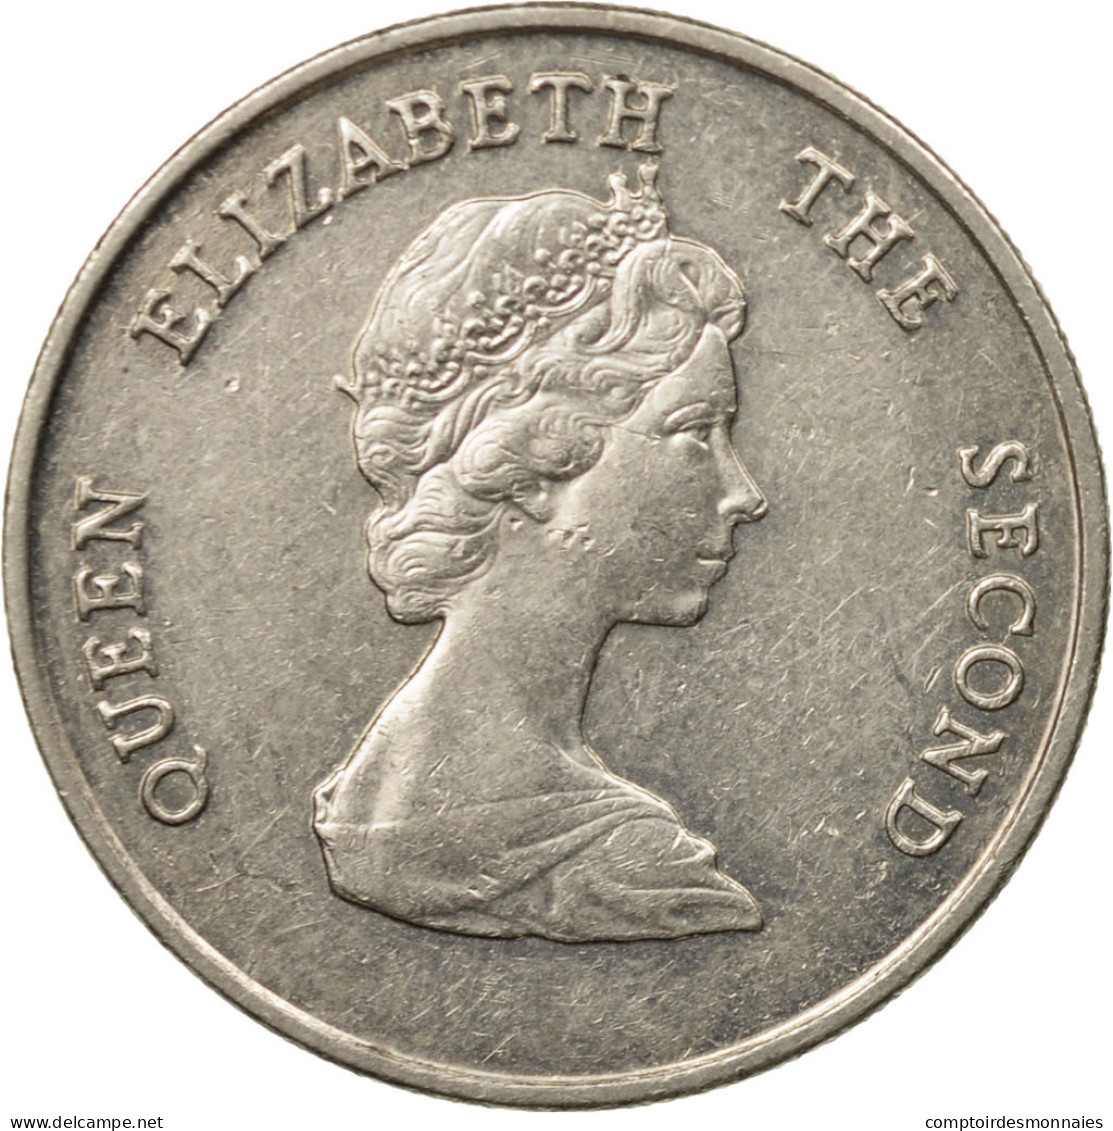 Monnaie, Etats Des Caraibes Orientales, Elizabeth II, 25 Cents, 1995, TTB - British Caribbean Territories